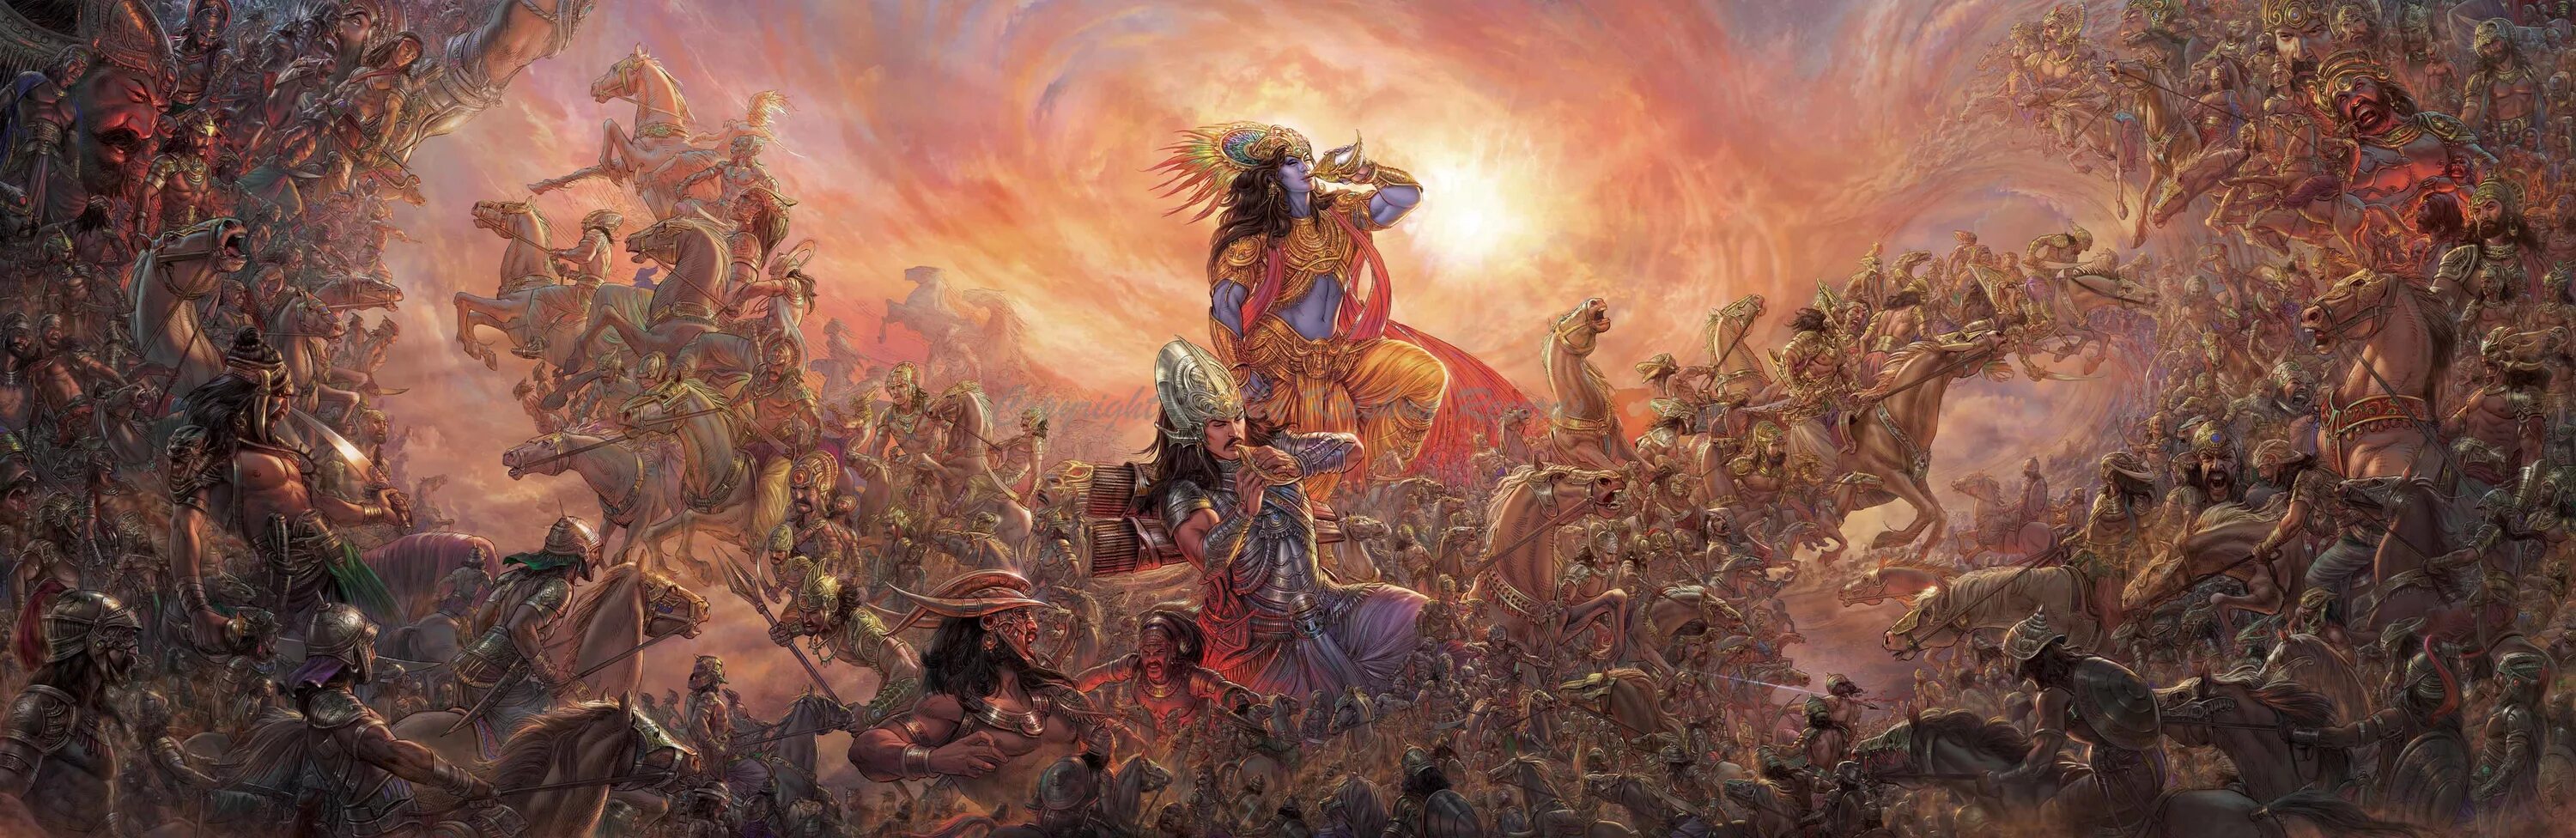 Битва людей за землю. Махабхарата Курукшетра битва. Битва на поле Курукшетра Махабхарата. Махабхарата битва богов. Махабхарата Арджуна на поле боя.